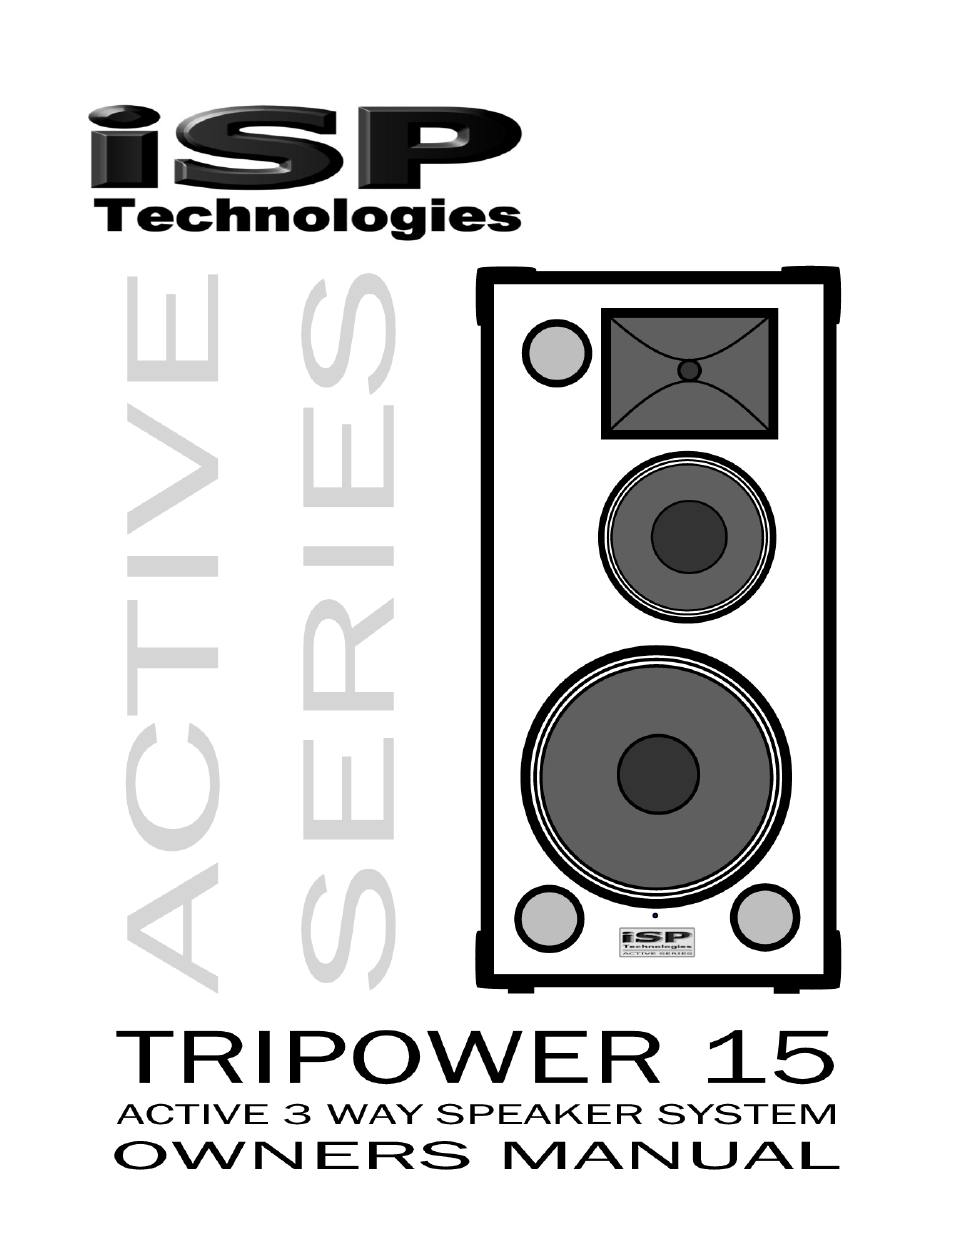 Tripower 15